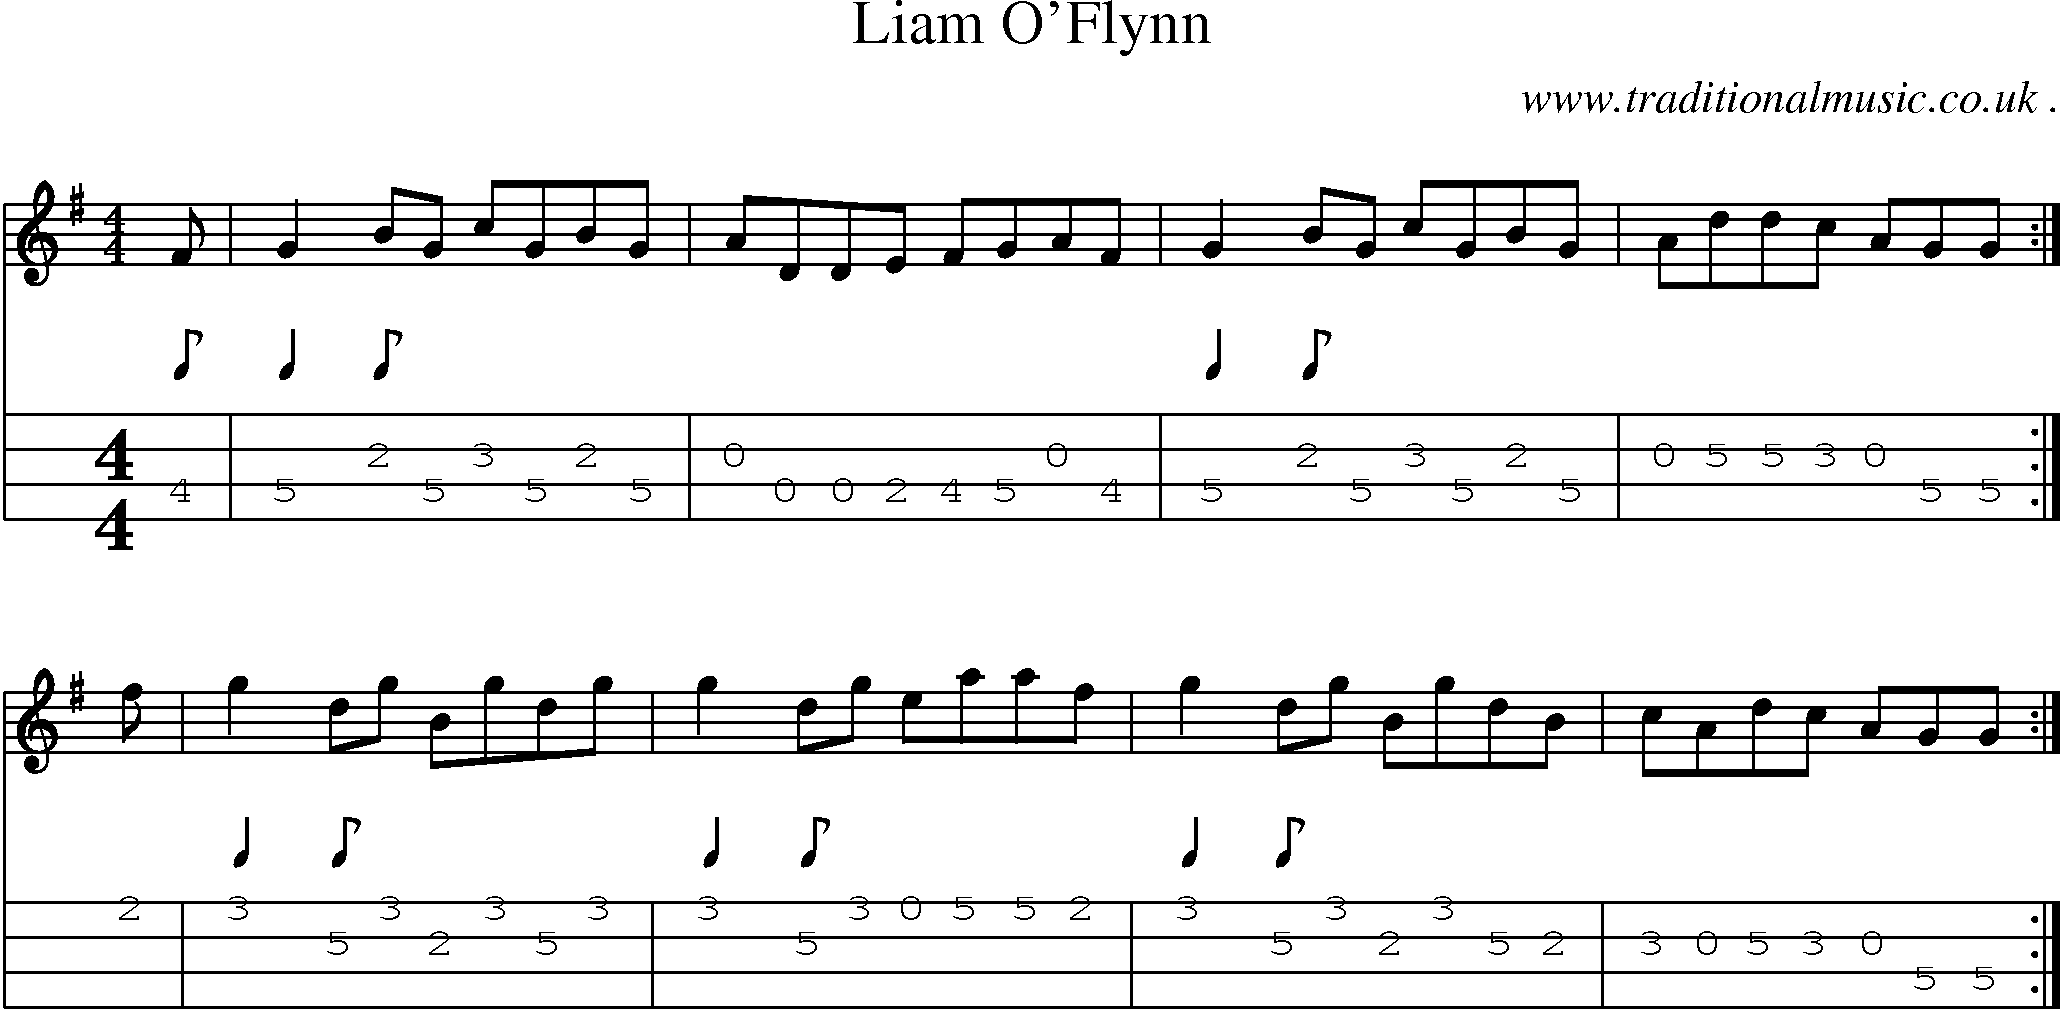 Sheet-Music and Mandolin Tabs for Liam Oflynn